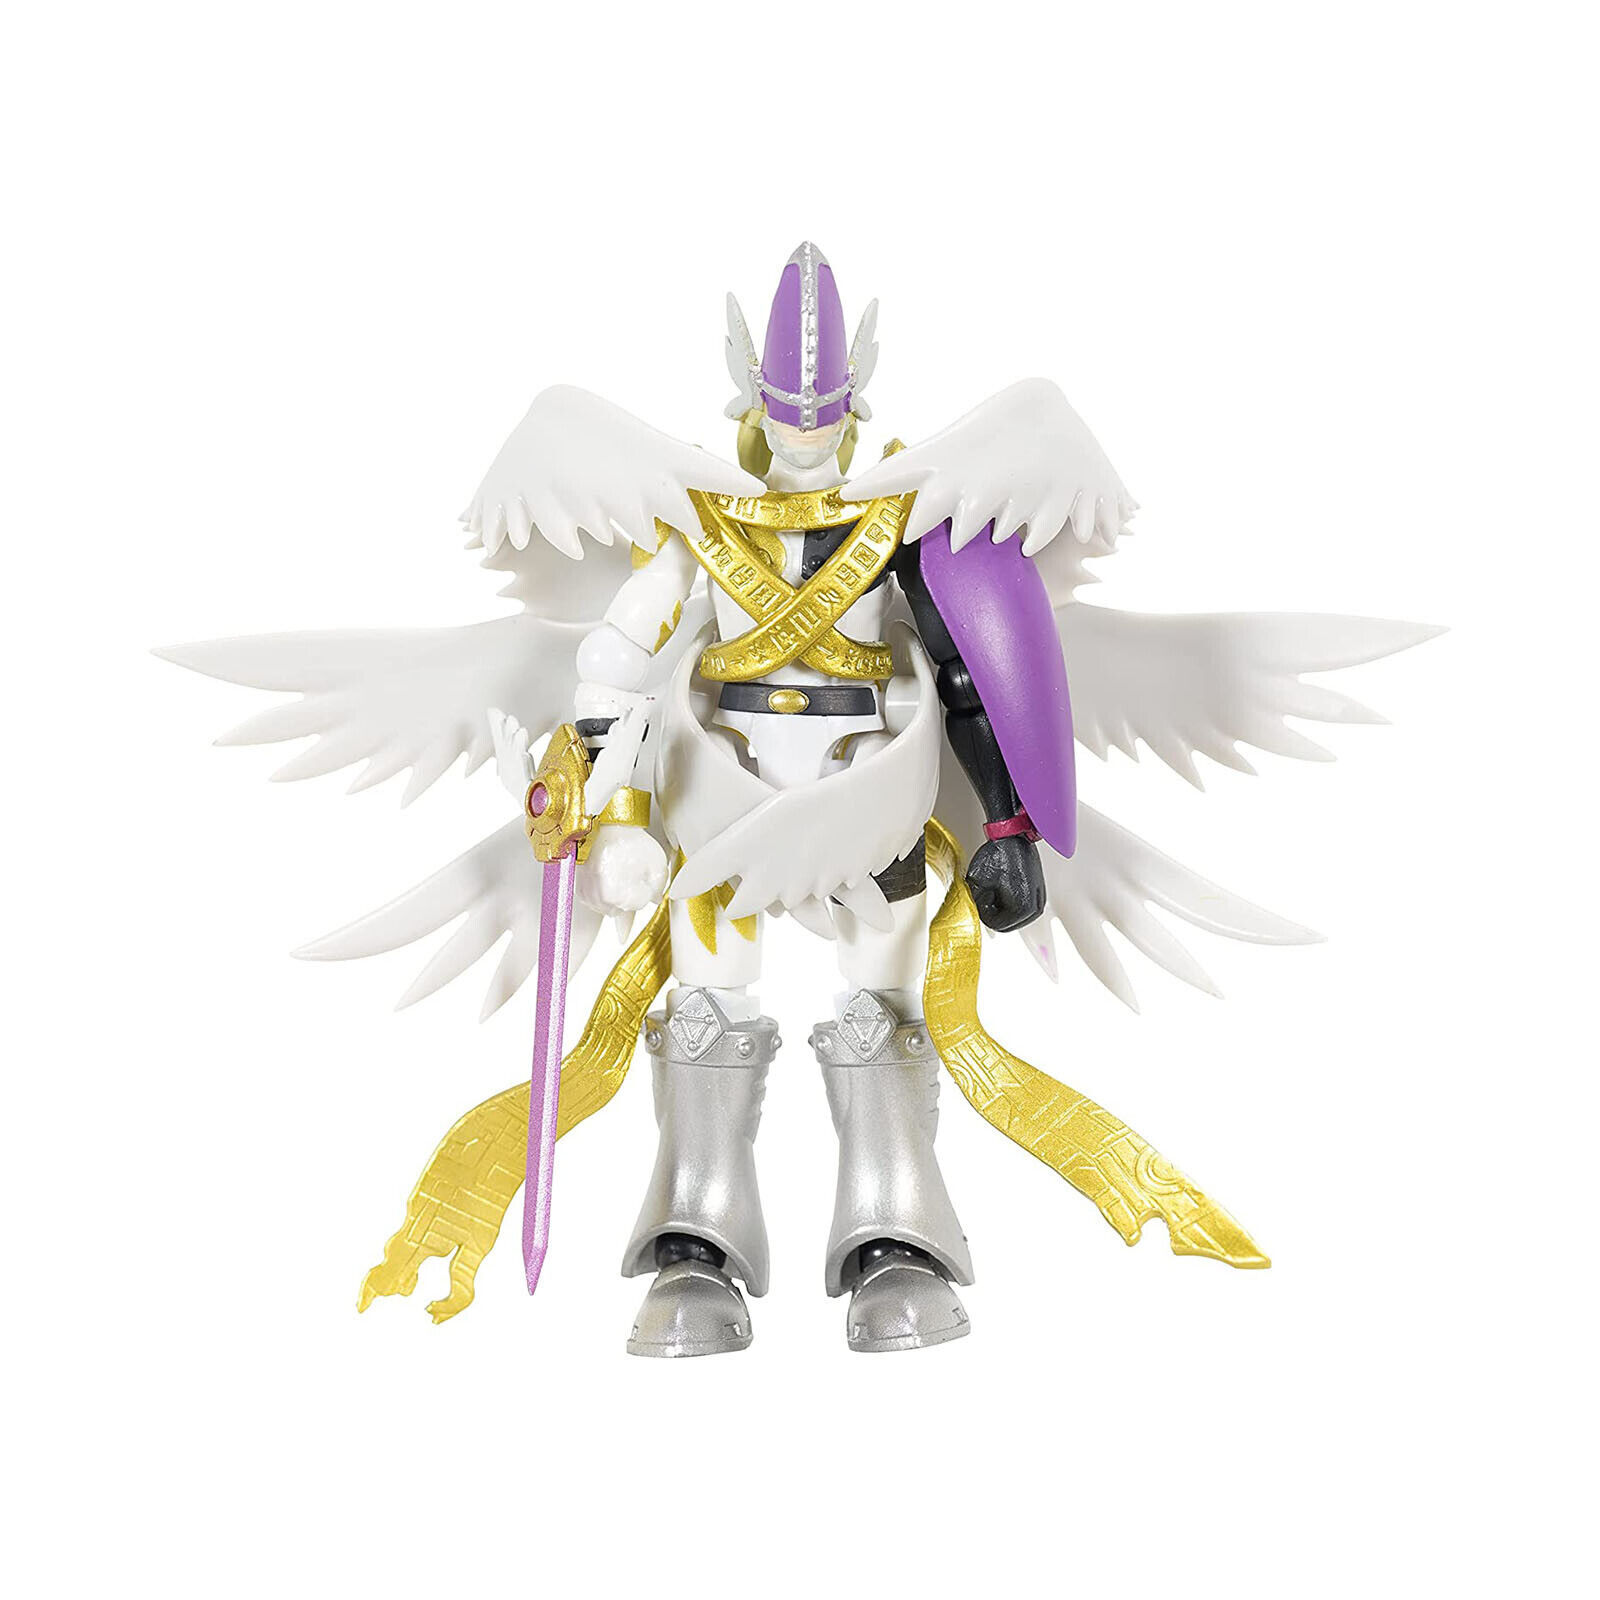 Bandai Digimon Shodo Magnaangemon 3.5 Inch Figure NEW IN STOCK